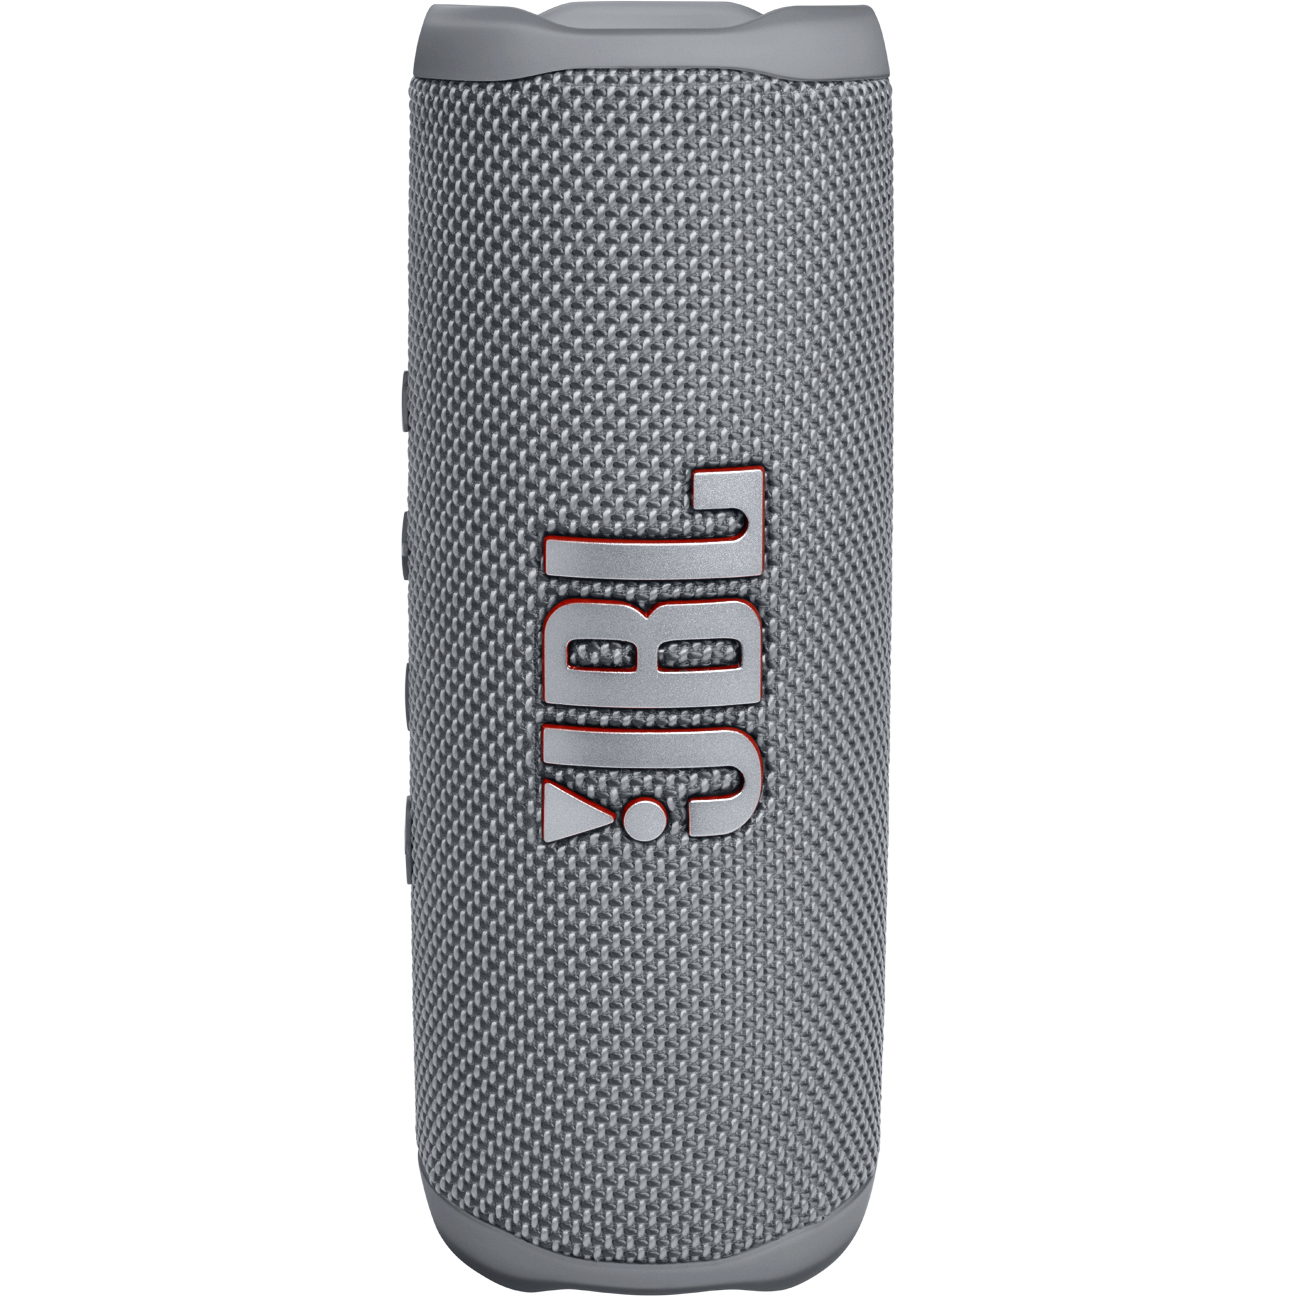 Портативная акустика JBL Flip 6 серый jbl portable speaker flip 5 bluetooth ipx7 12 h